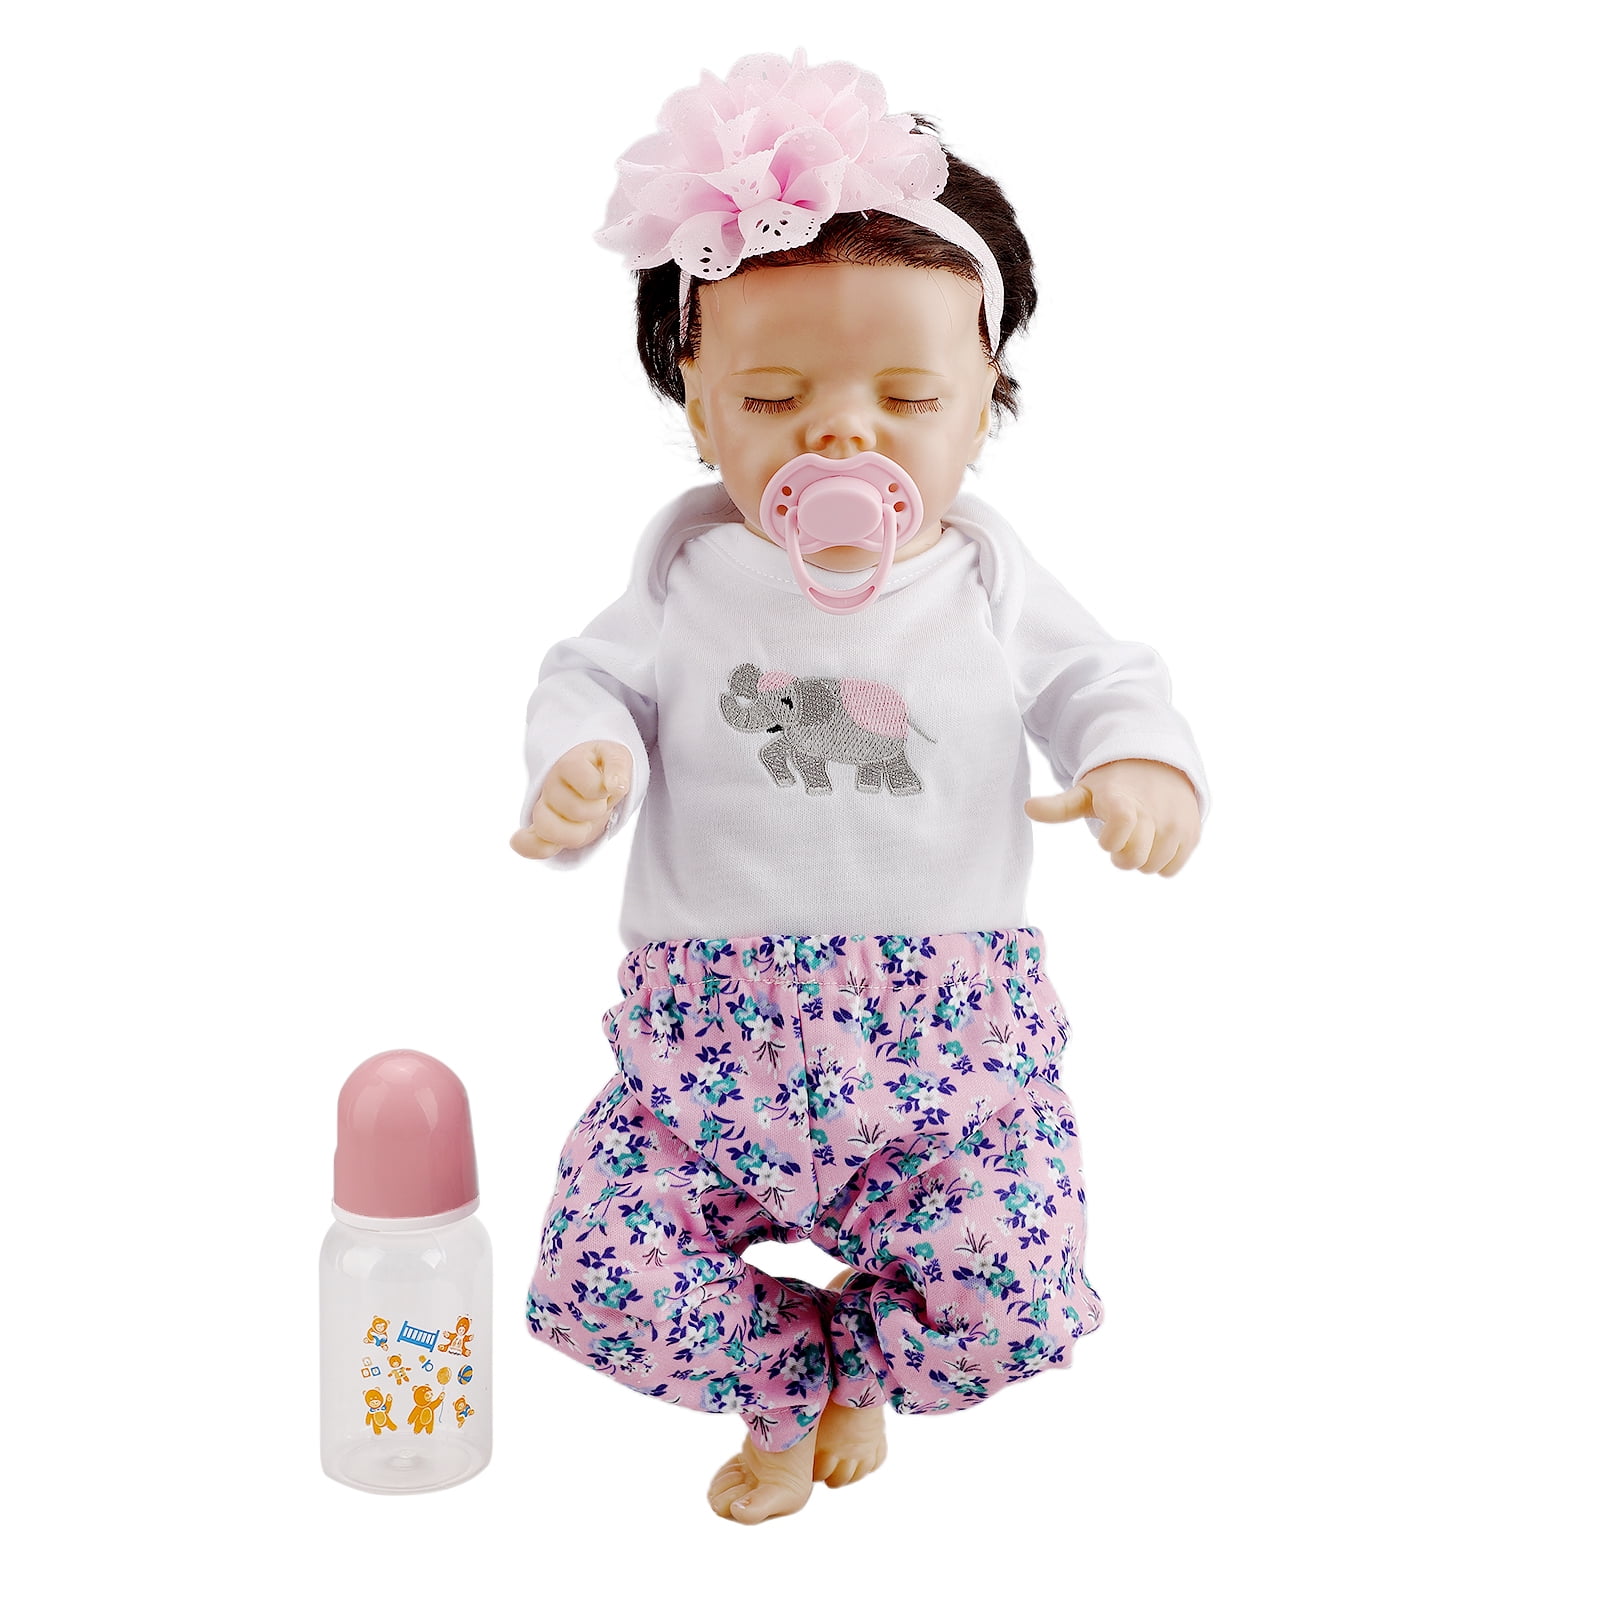 17"Full Body Silicone Reborn Baby Doll Lifelike Anatomically Girl Doll Xmas Gift